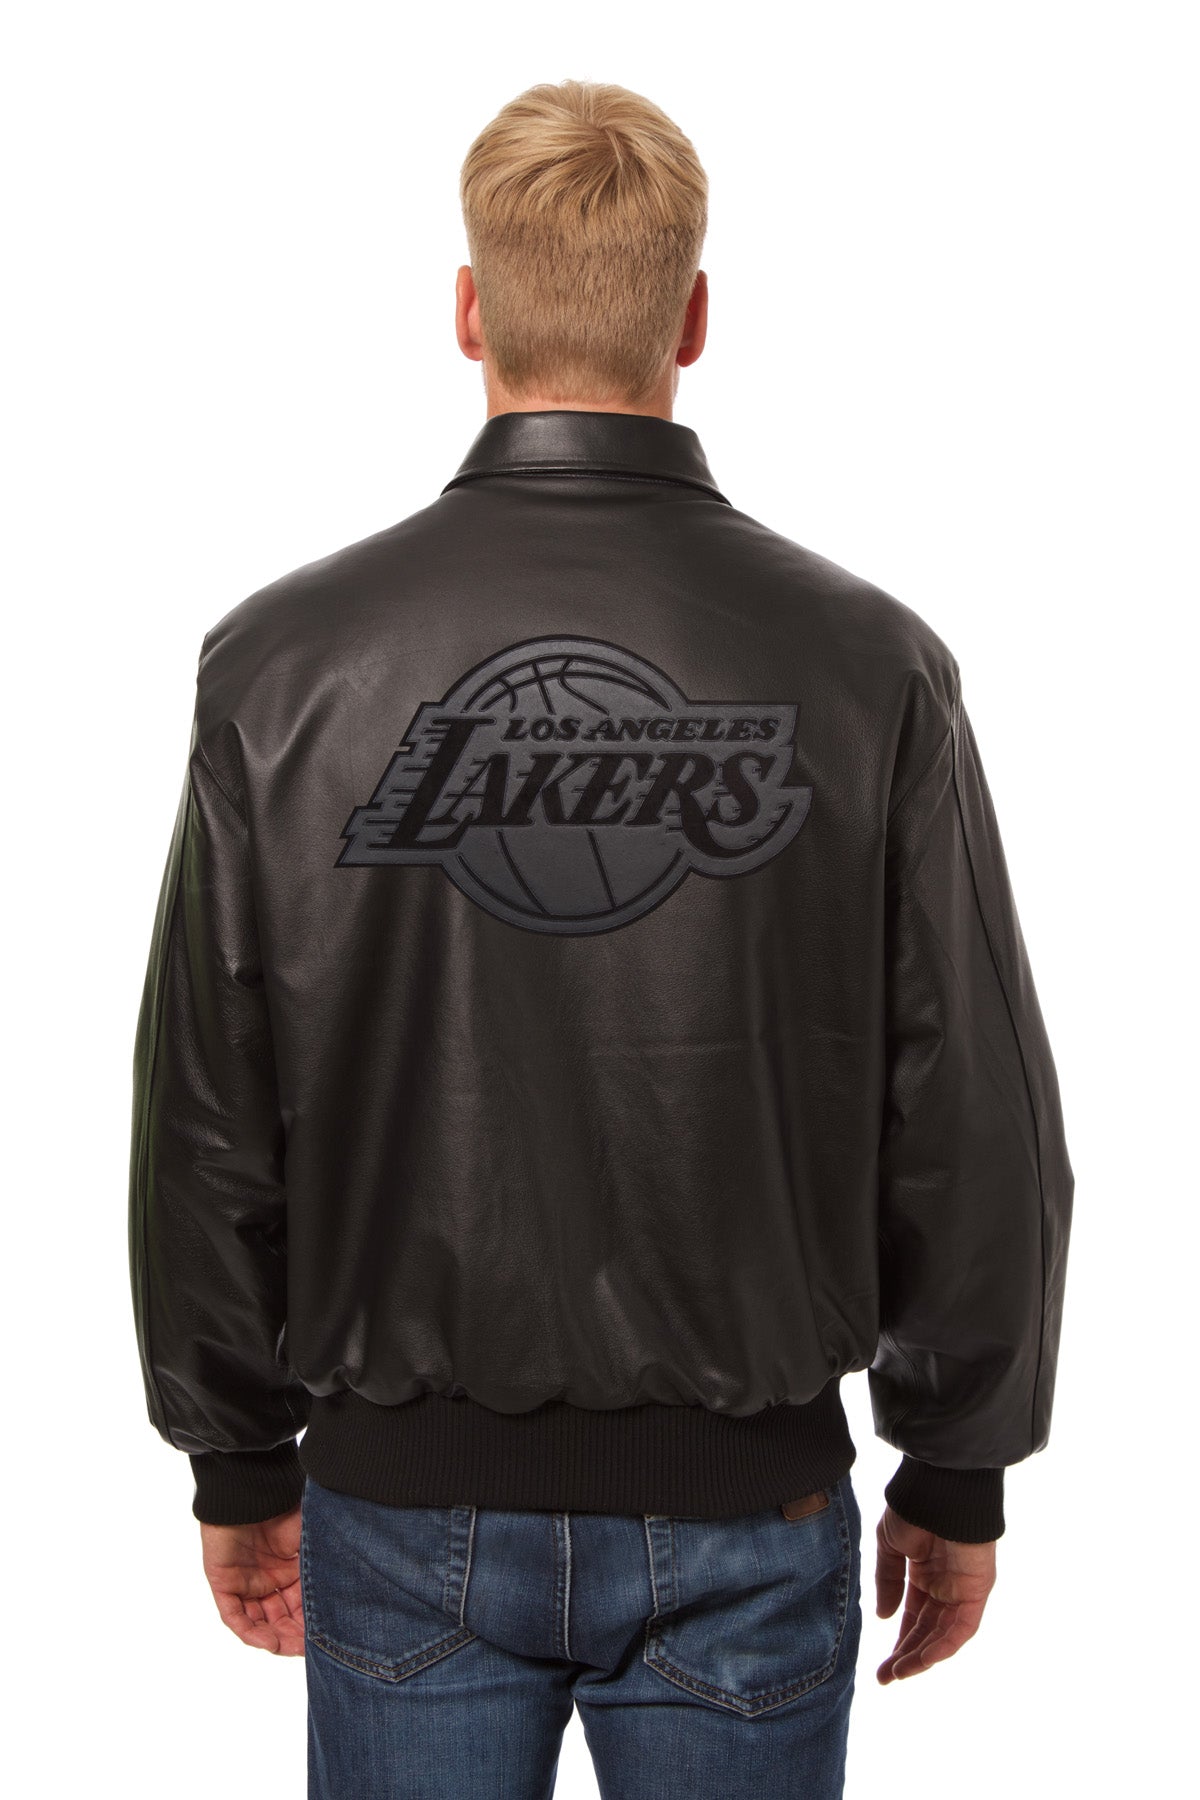 Los Angeles Lakers Full Leather Jacket - Black/Black Small